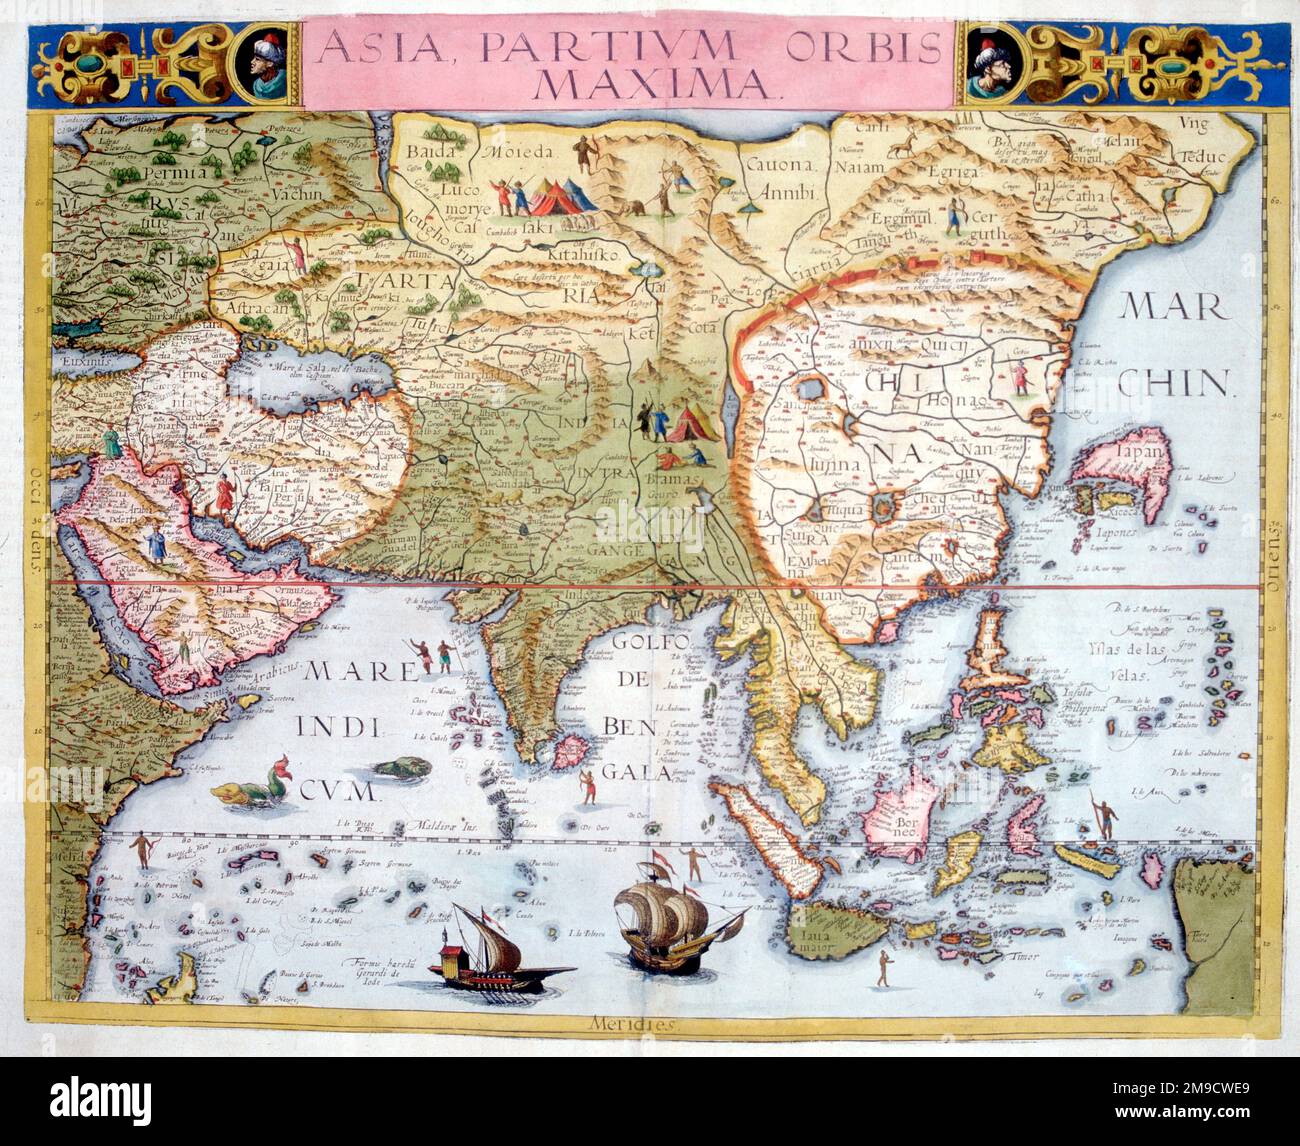 !Karte des 6. Jahrhunderts - Asien Partium Orbis Maxima Stockfoto